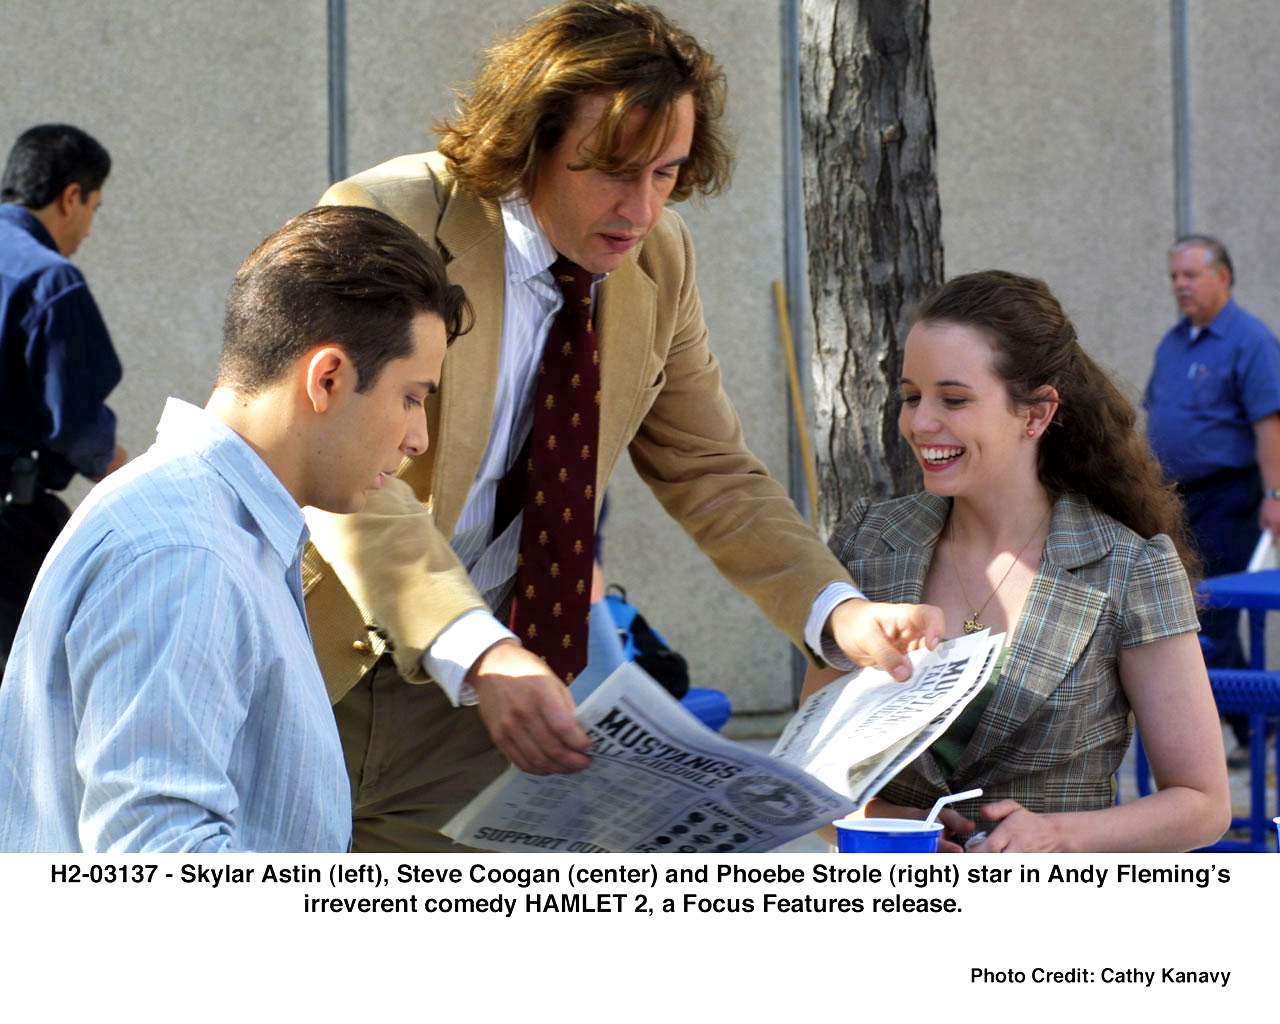 Skylar Astin, Steve Coogan and Phoebe Strole in Focus Features' Hamlet 2 (2008). Photo Credit: Cathy Kanavy.